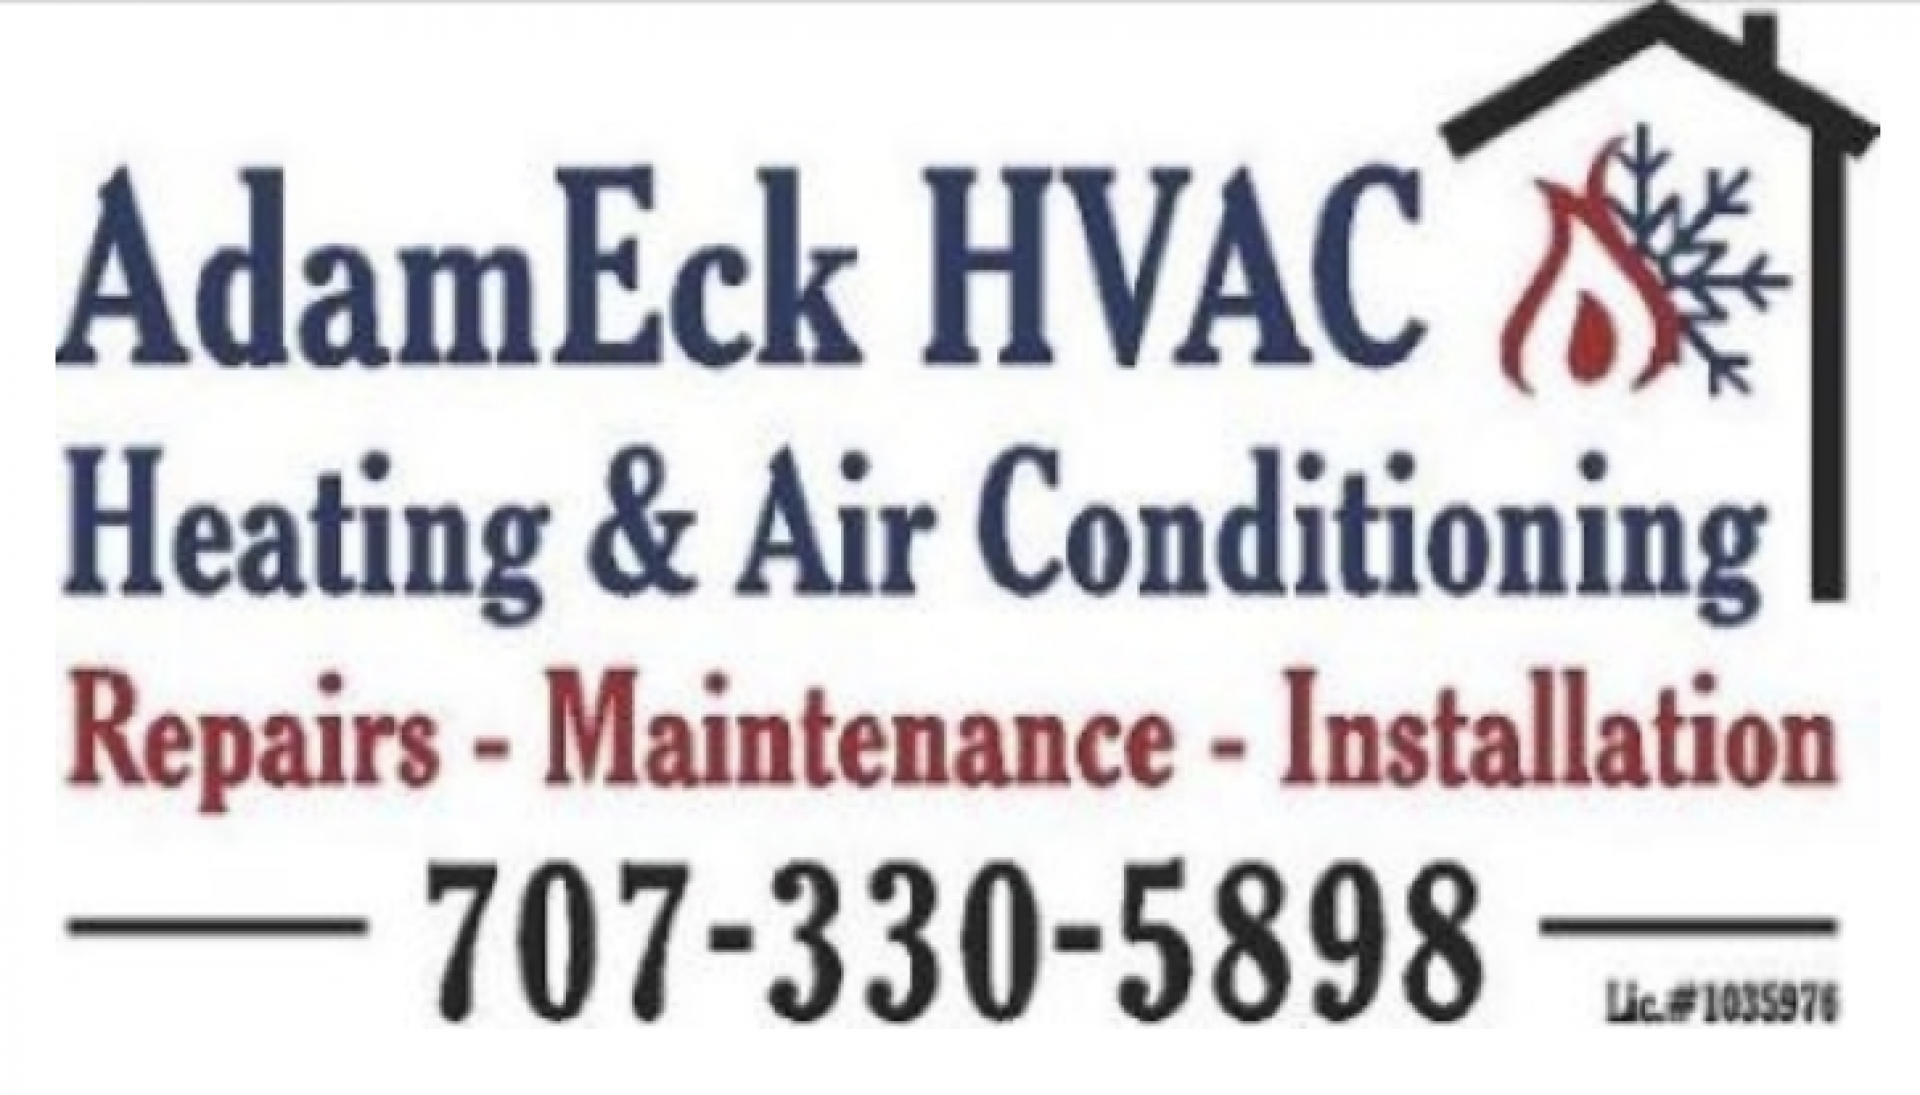 AdamEck HVAC company logo